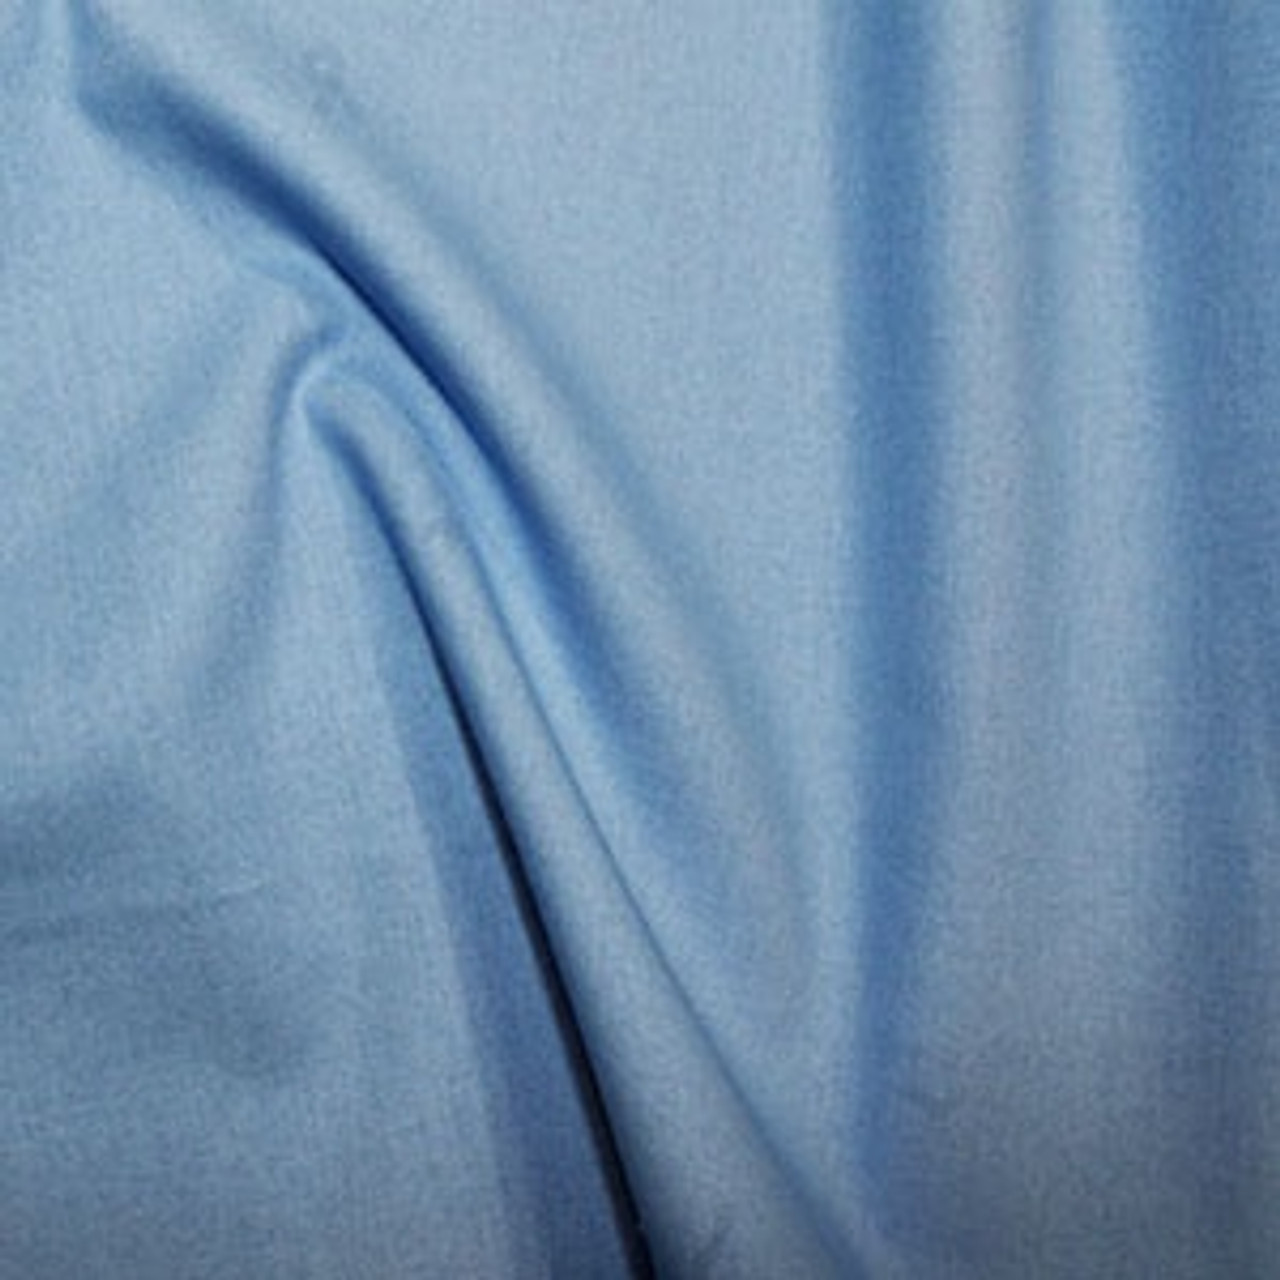 Cyan 100% Cotton Fabric, 112cm/44in wide, Sold Per HALF Metre